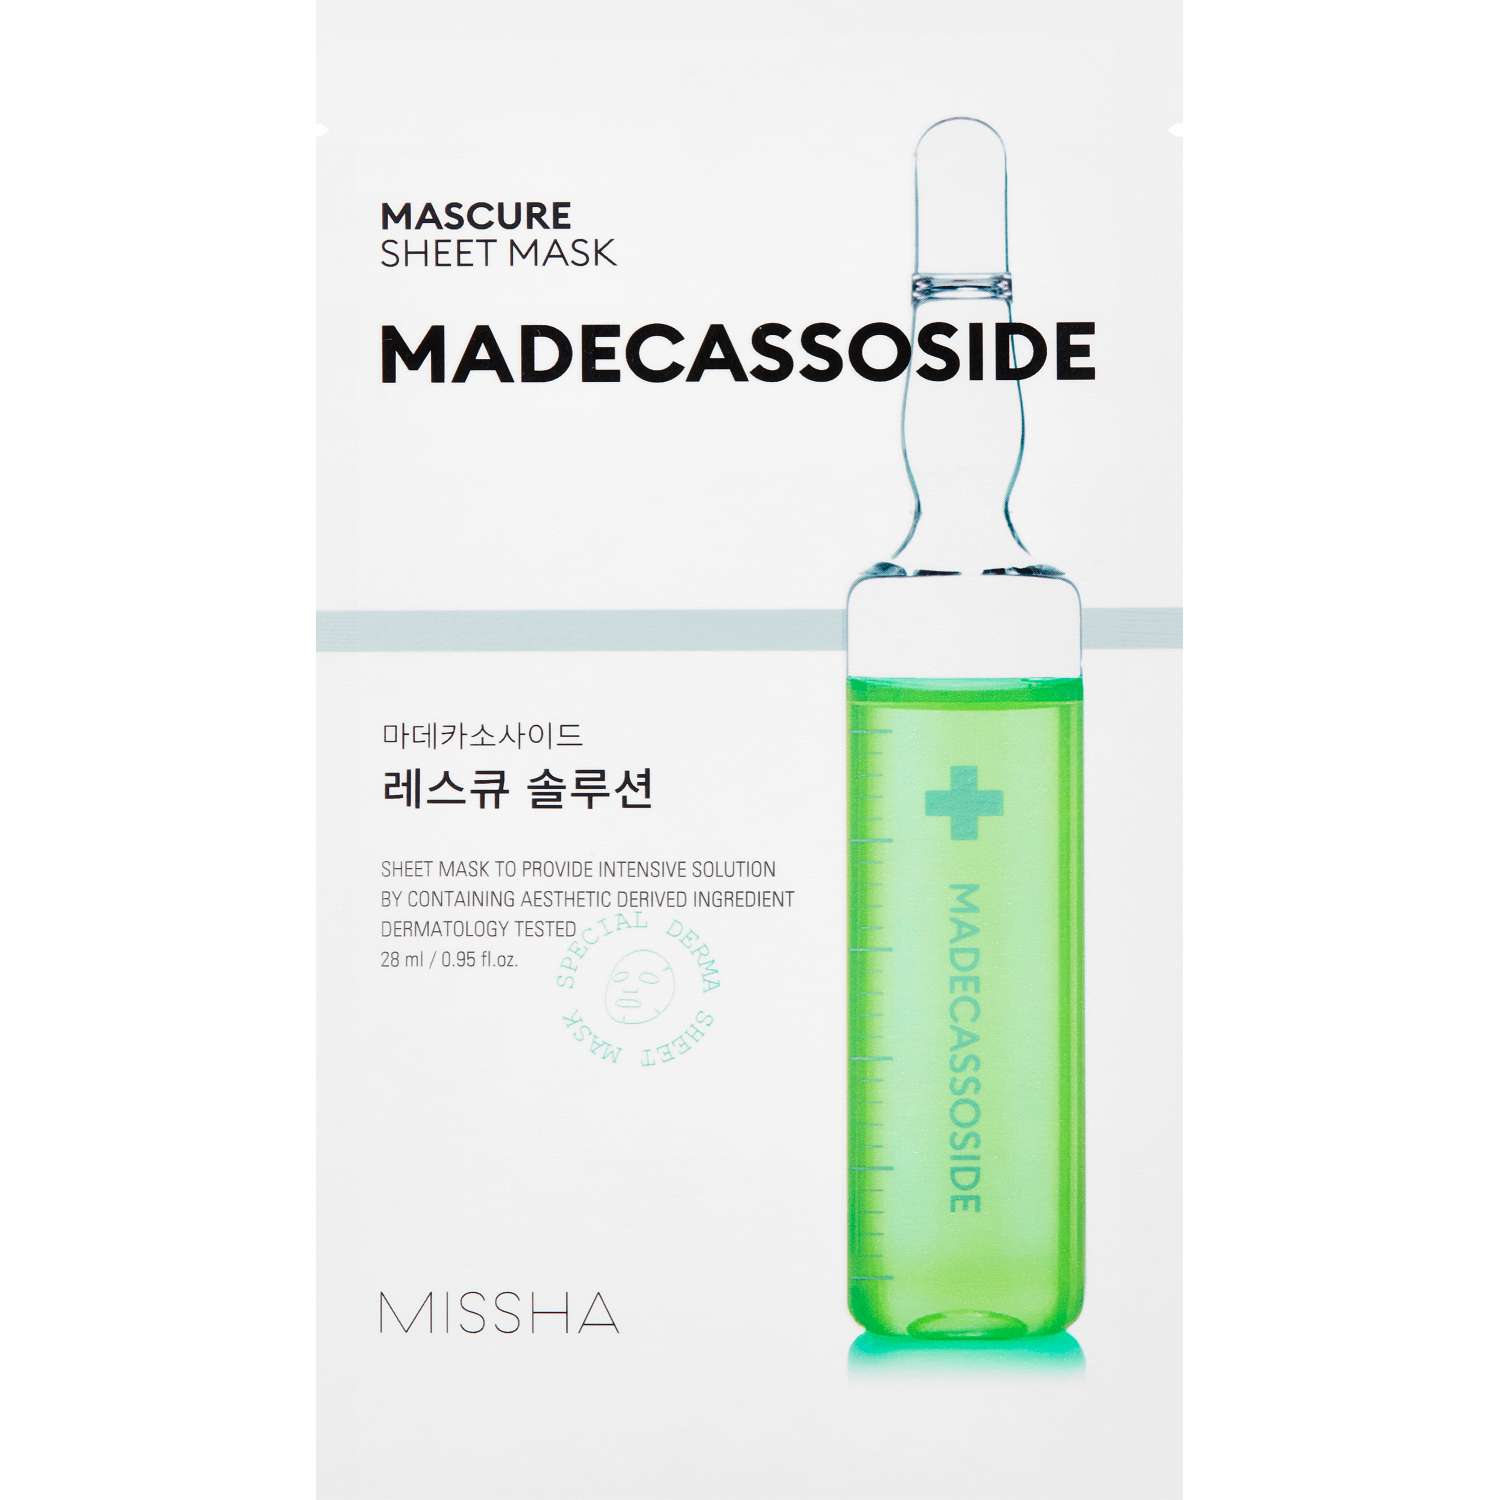 Маска тканевая MISSHA Mascure SOS с мадекаccосидом для восстановления ослабленной кожи 28 мл - фото 1